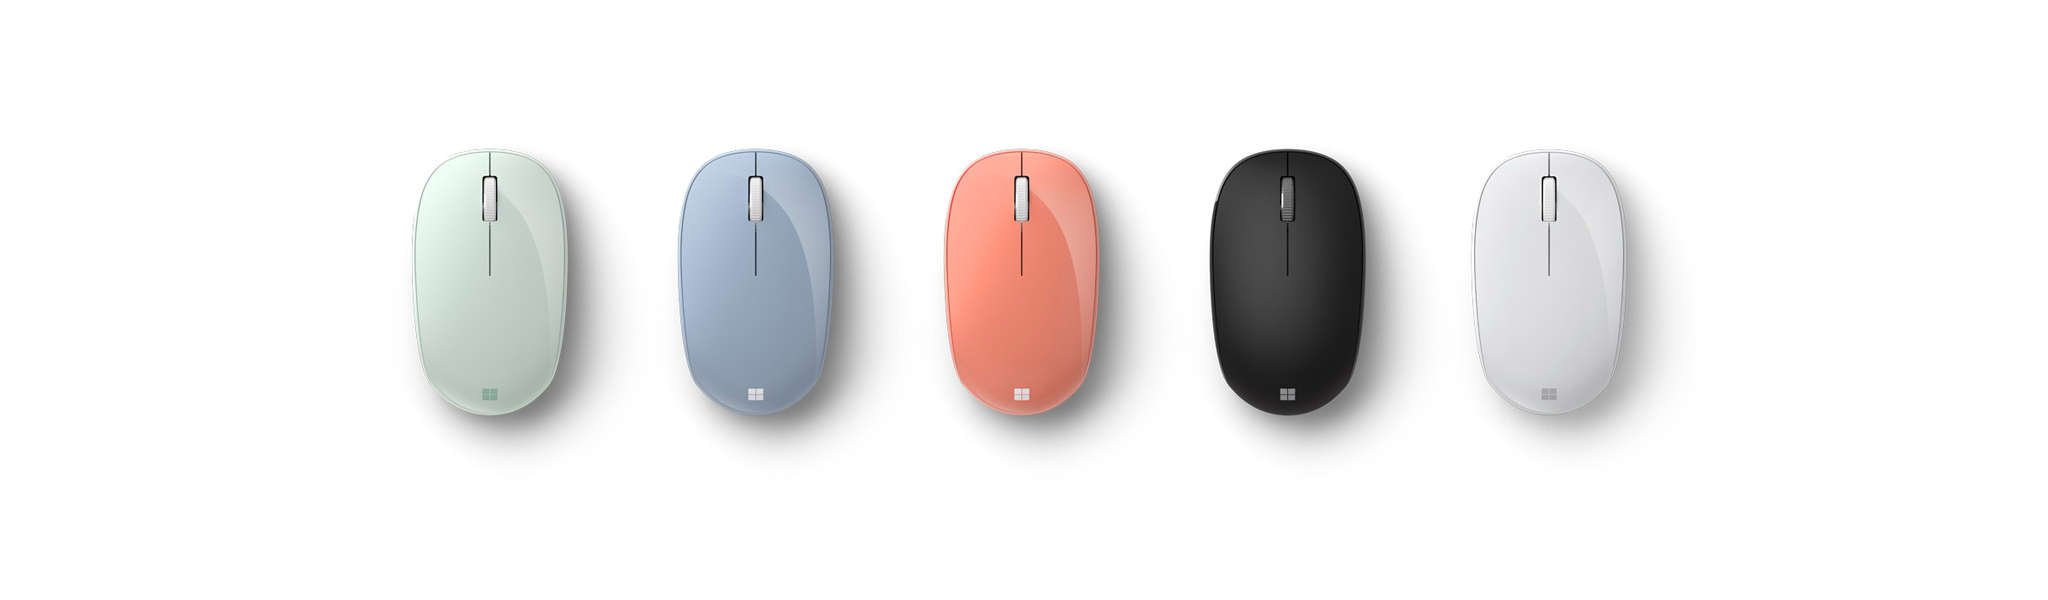 Microsoft Bluetooth® Mouse en varios colores